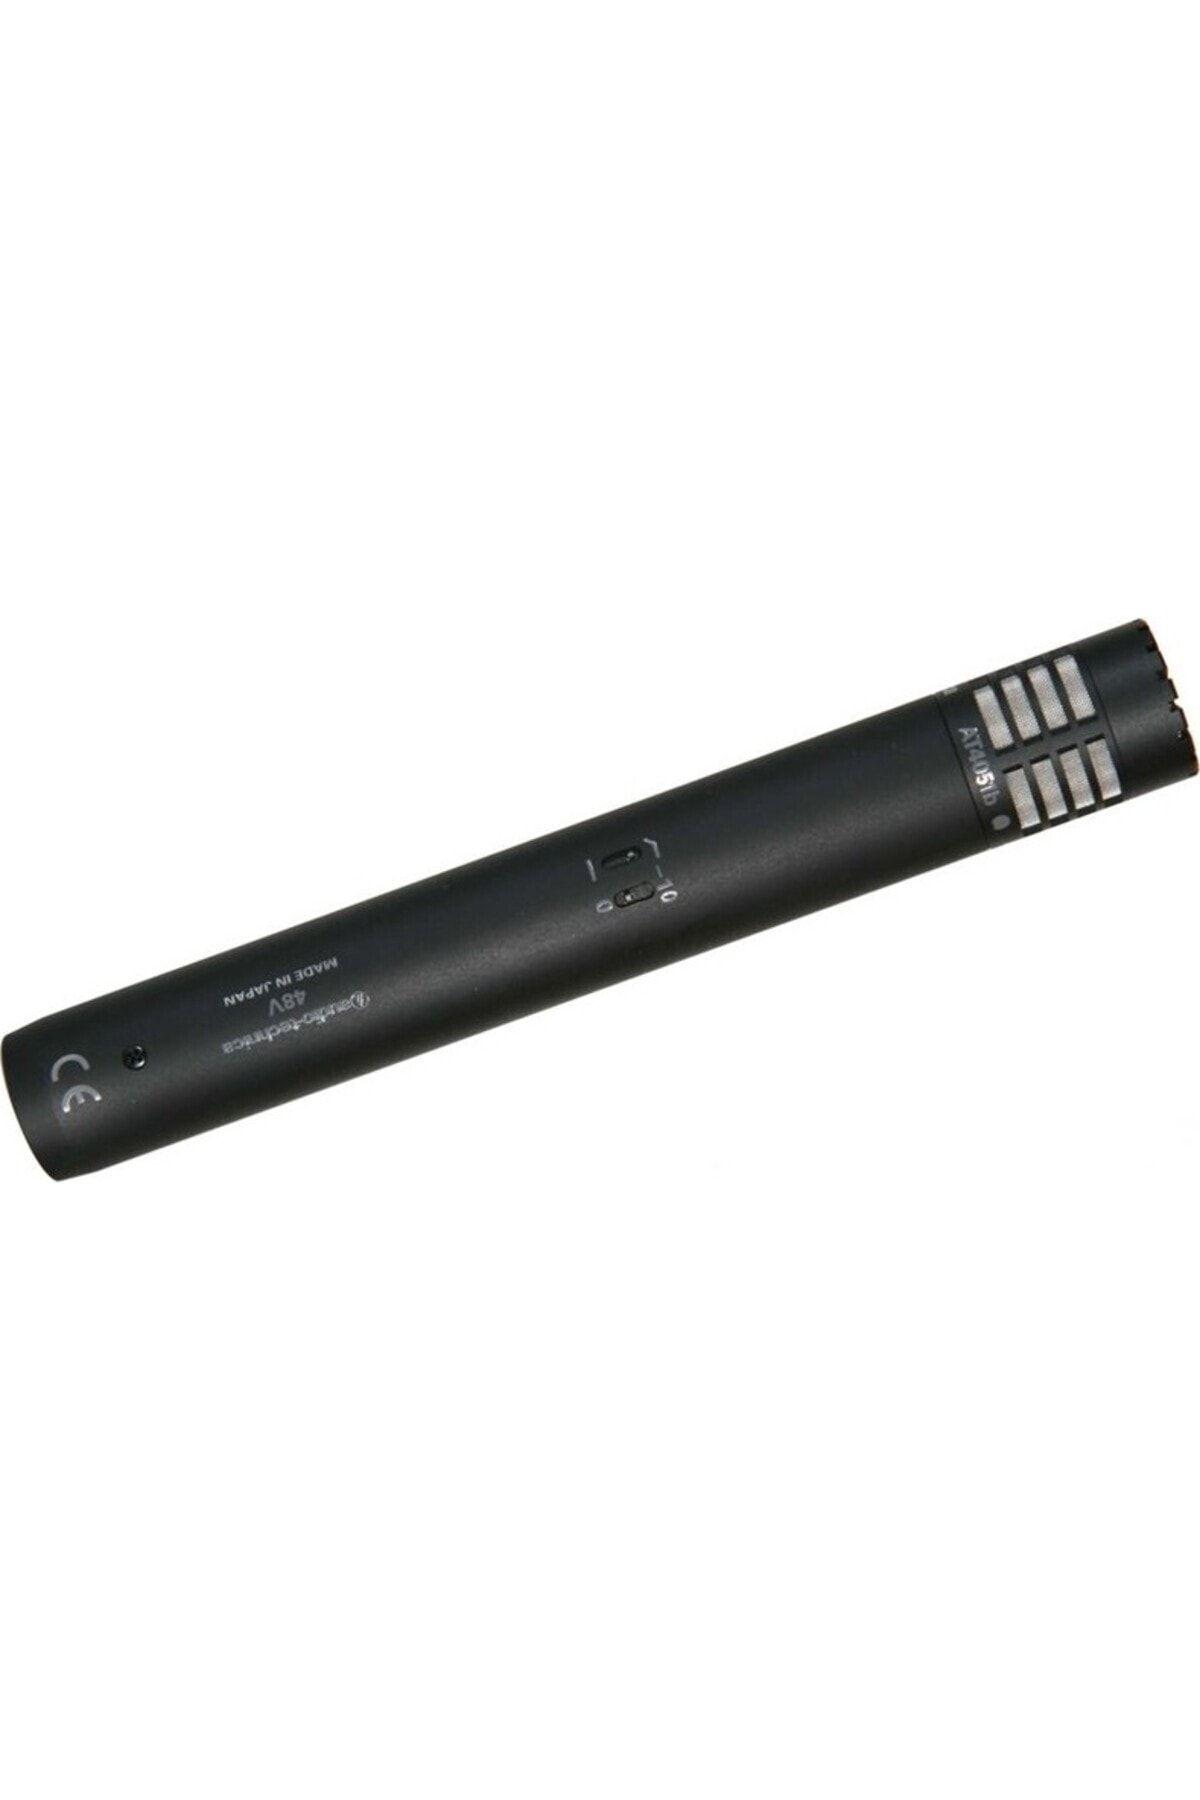 Audio Technica At4051B Cardioid Condenser Pencil Microphone